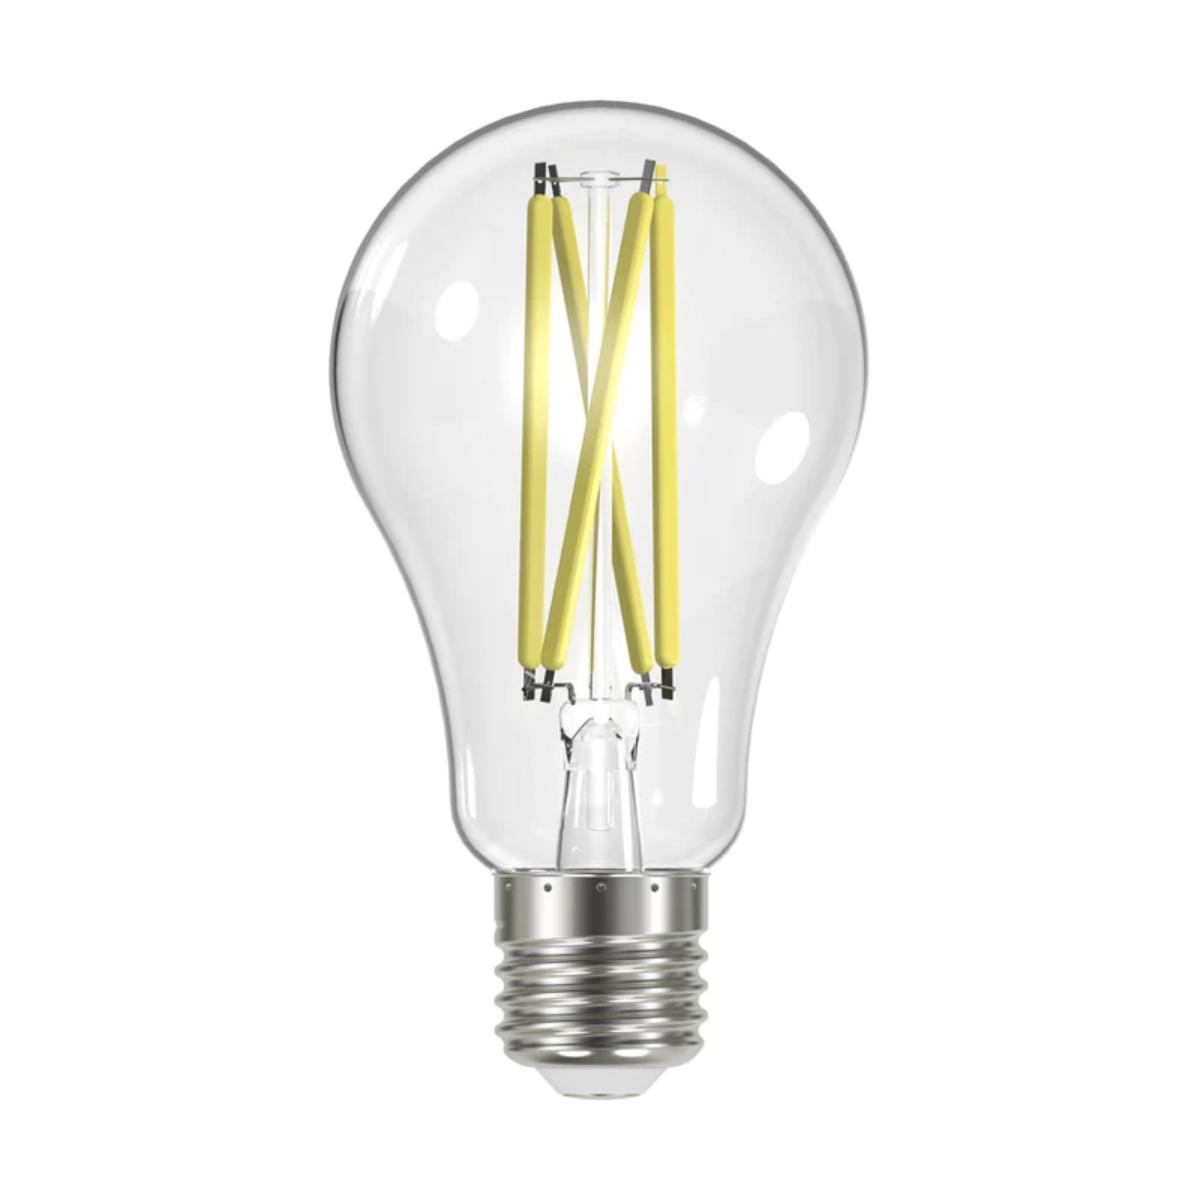 A19 LED Bulb, 100W Equivalent, 13 Watt, 1500 Lumens, 3000K, E26 Medium Base, Clear Finish, Pack Of 4